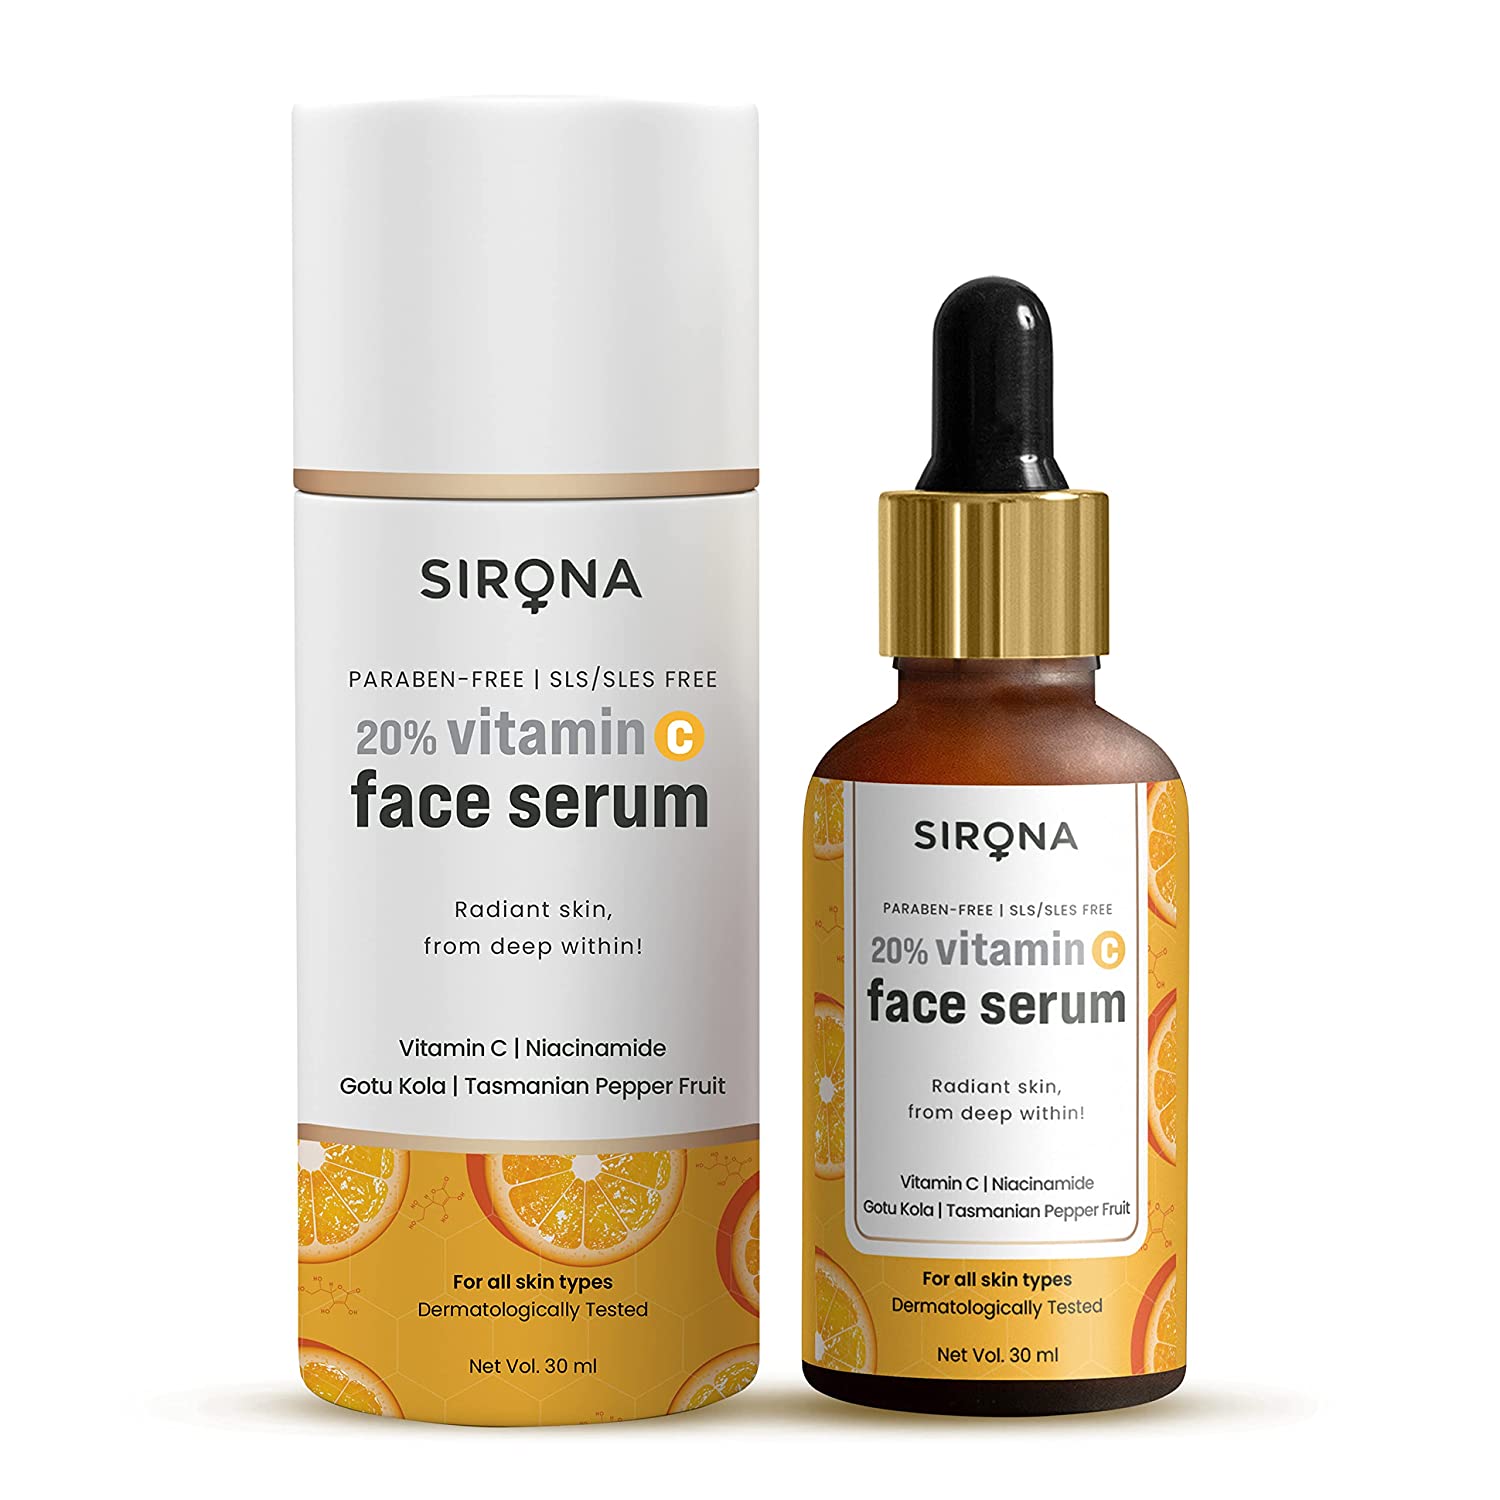 Sirona 20% Vitamin C Face Serum - 30ml